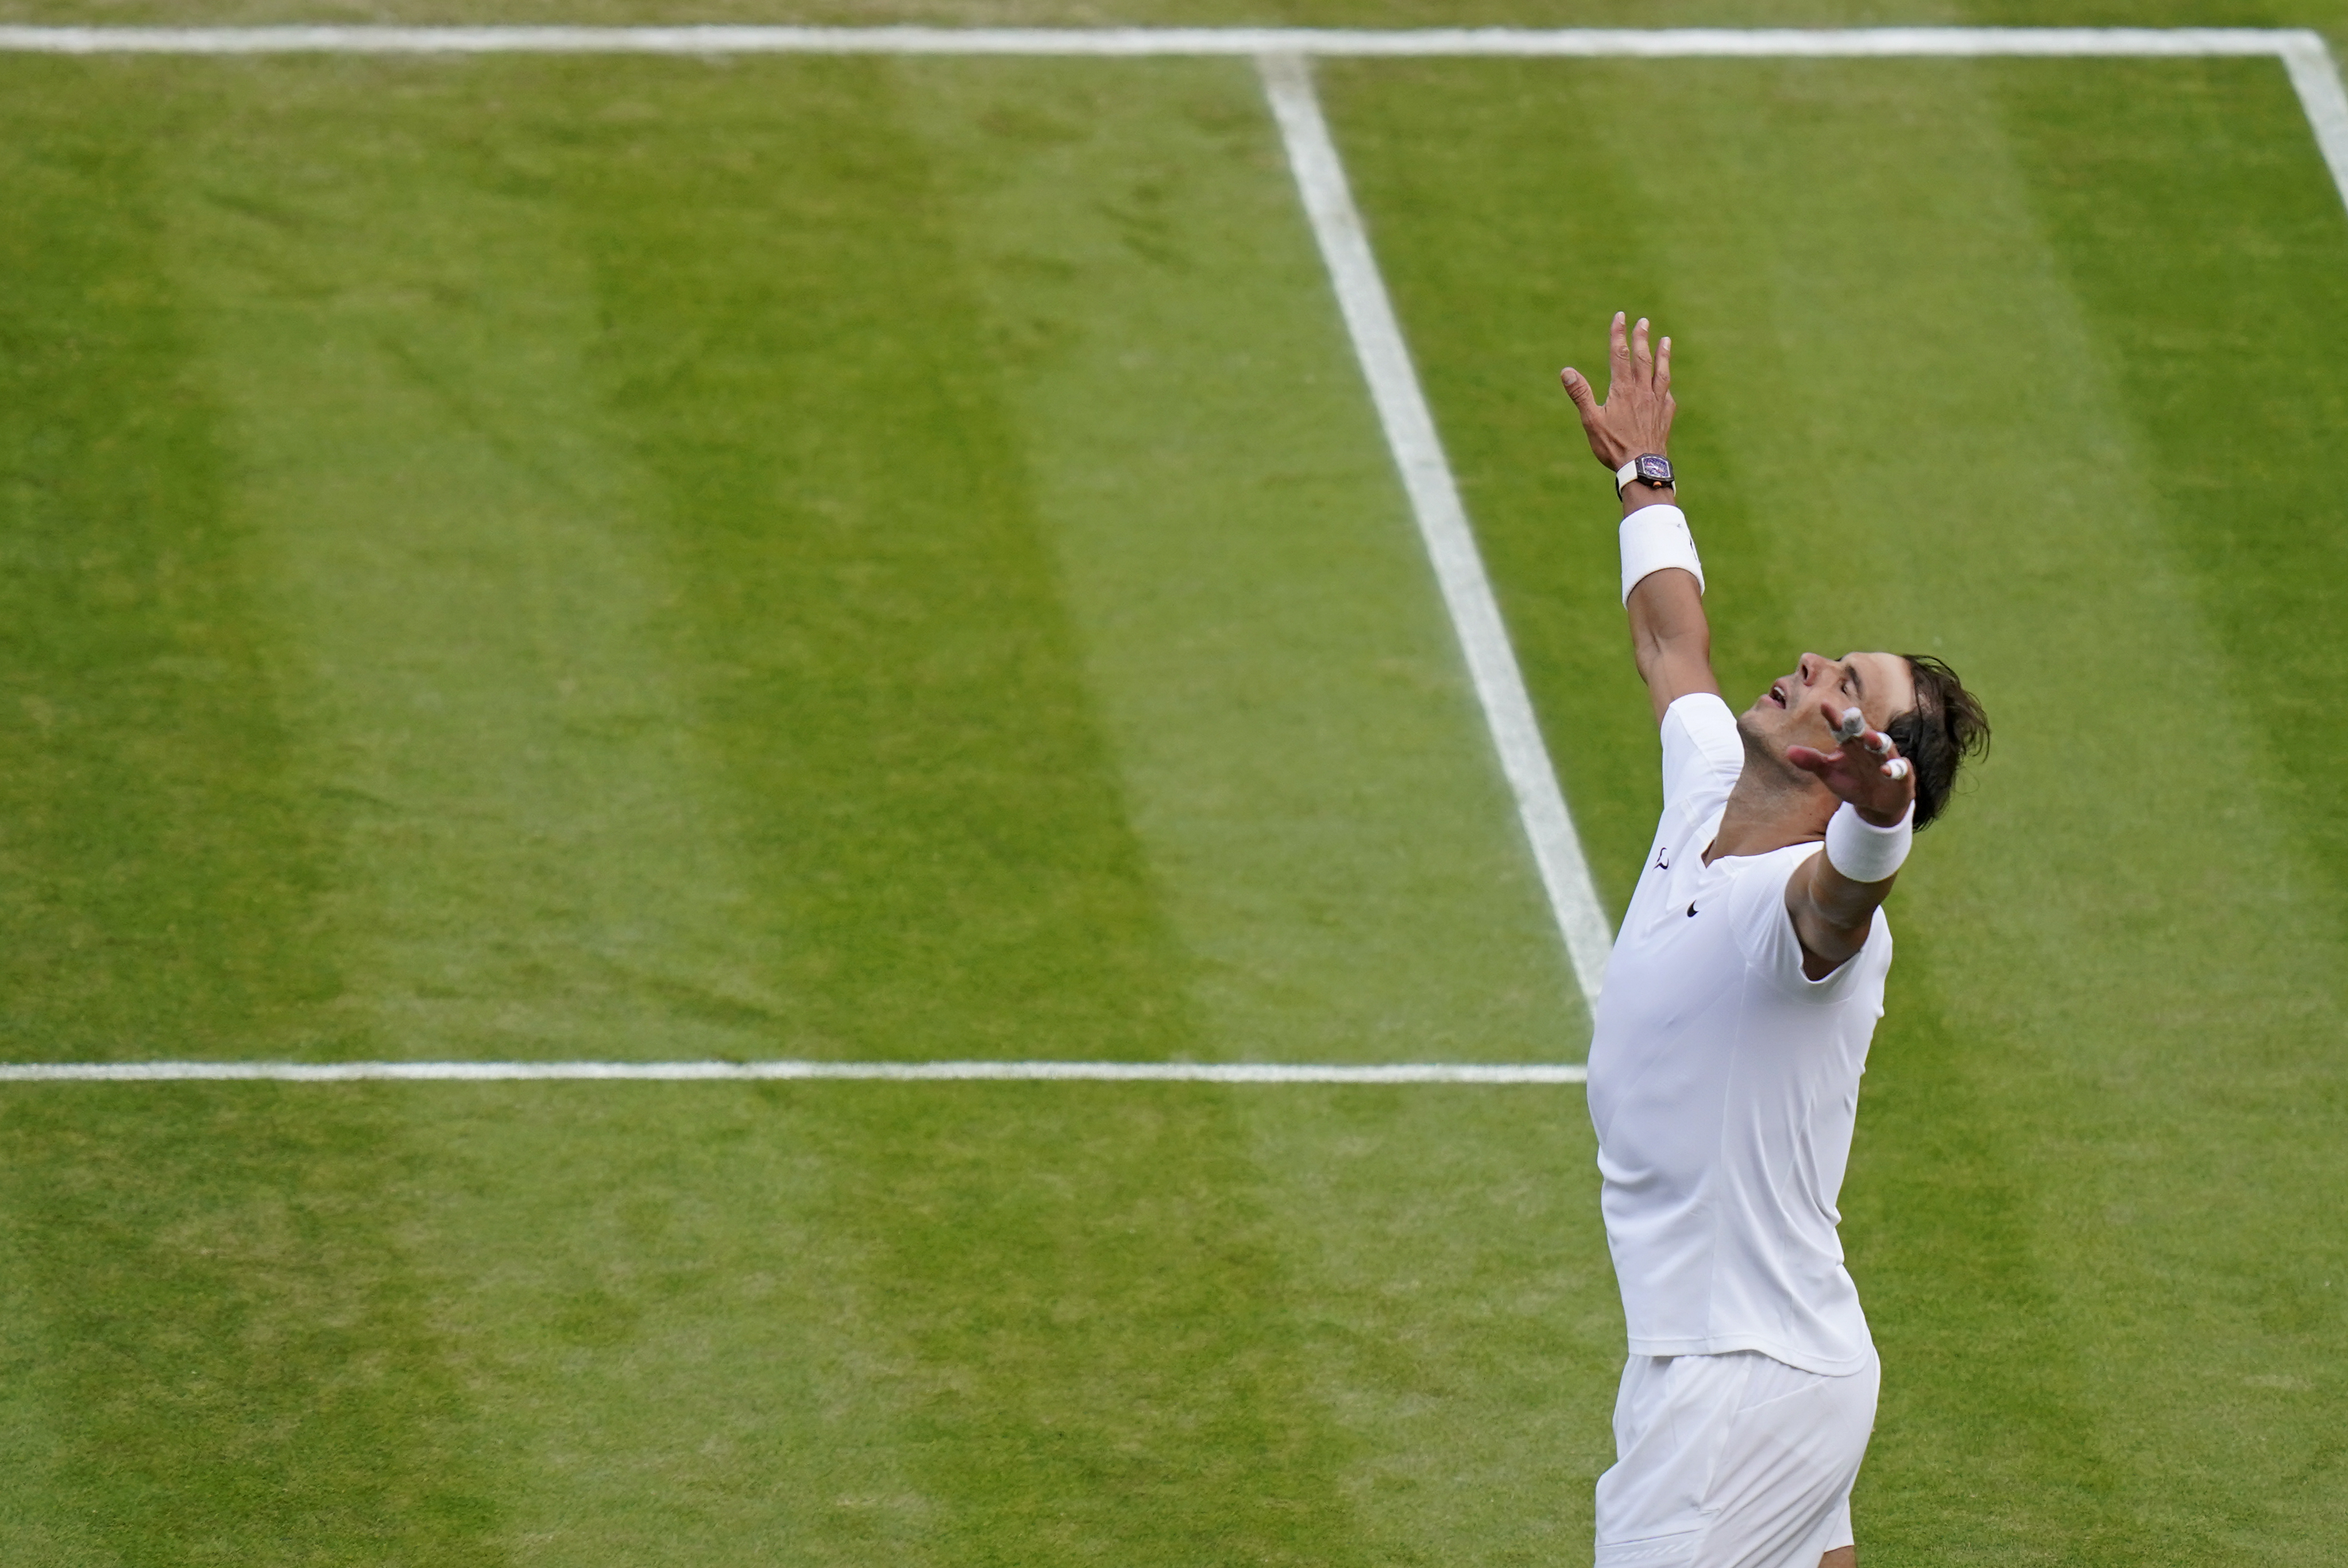 Wimbledon semifinals How to watch Djokovic vs